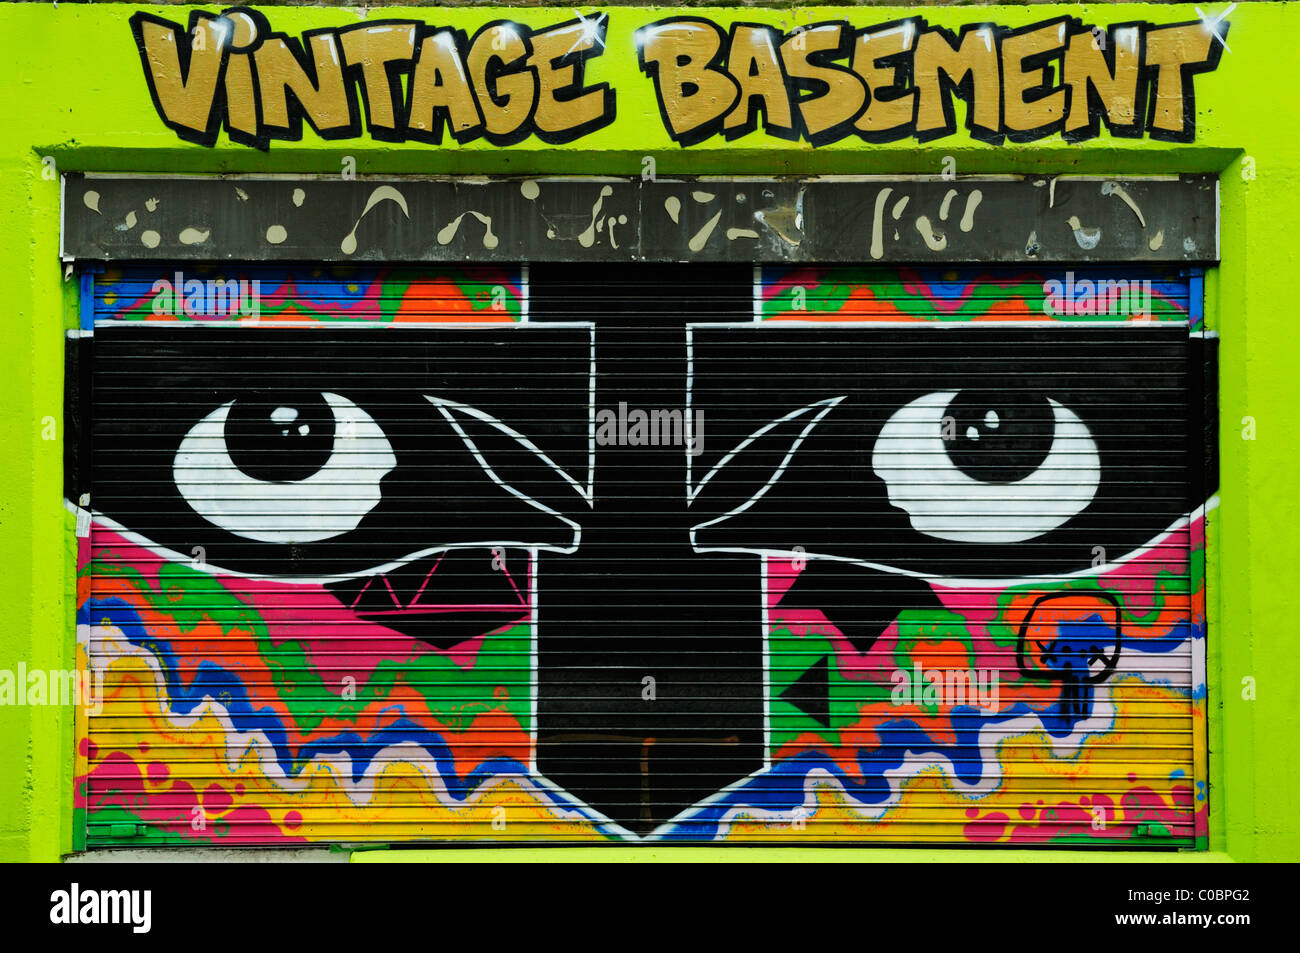 Graffiti on Vintage Basement Shop Grille, Brick Lane, London, England, UK Stock Photo